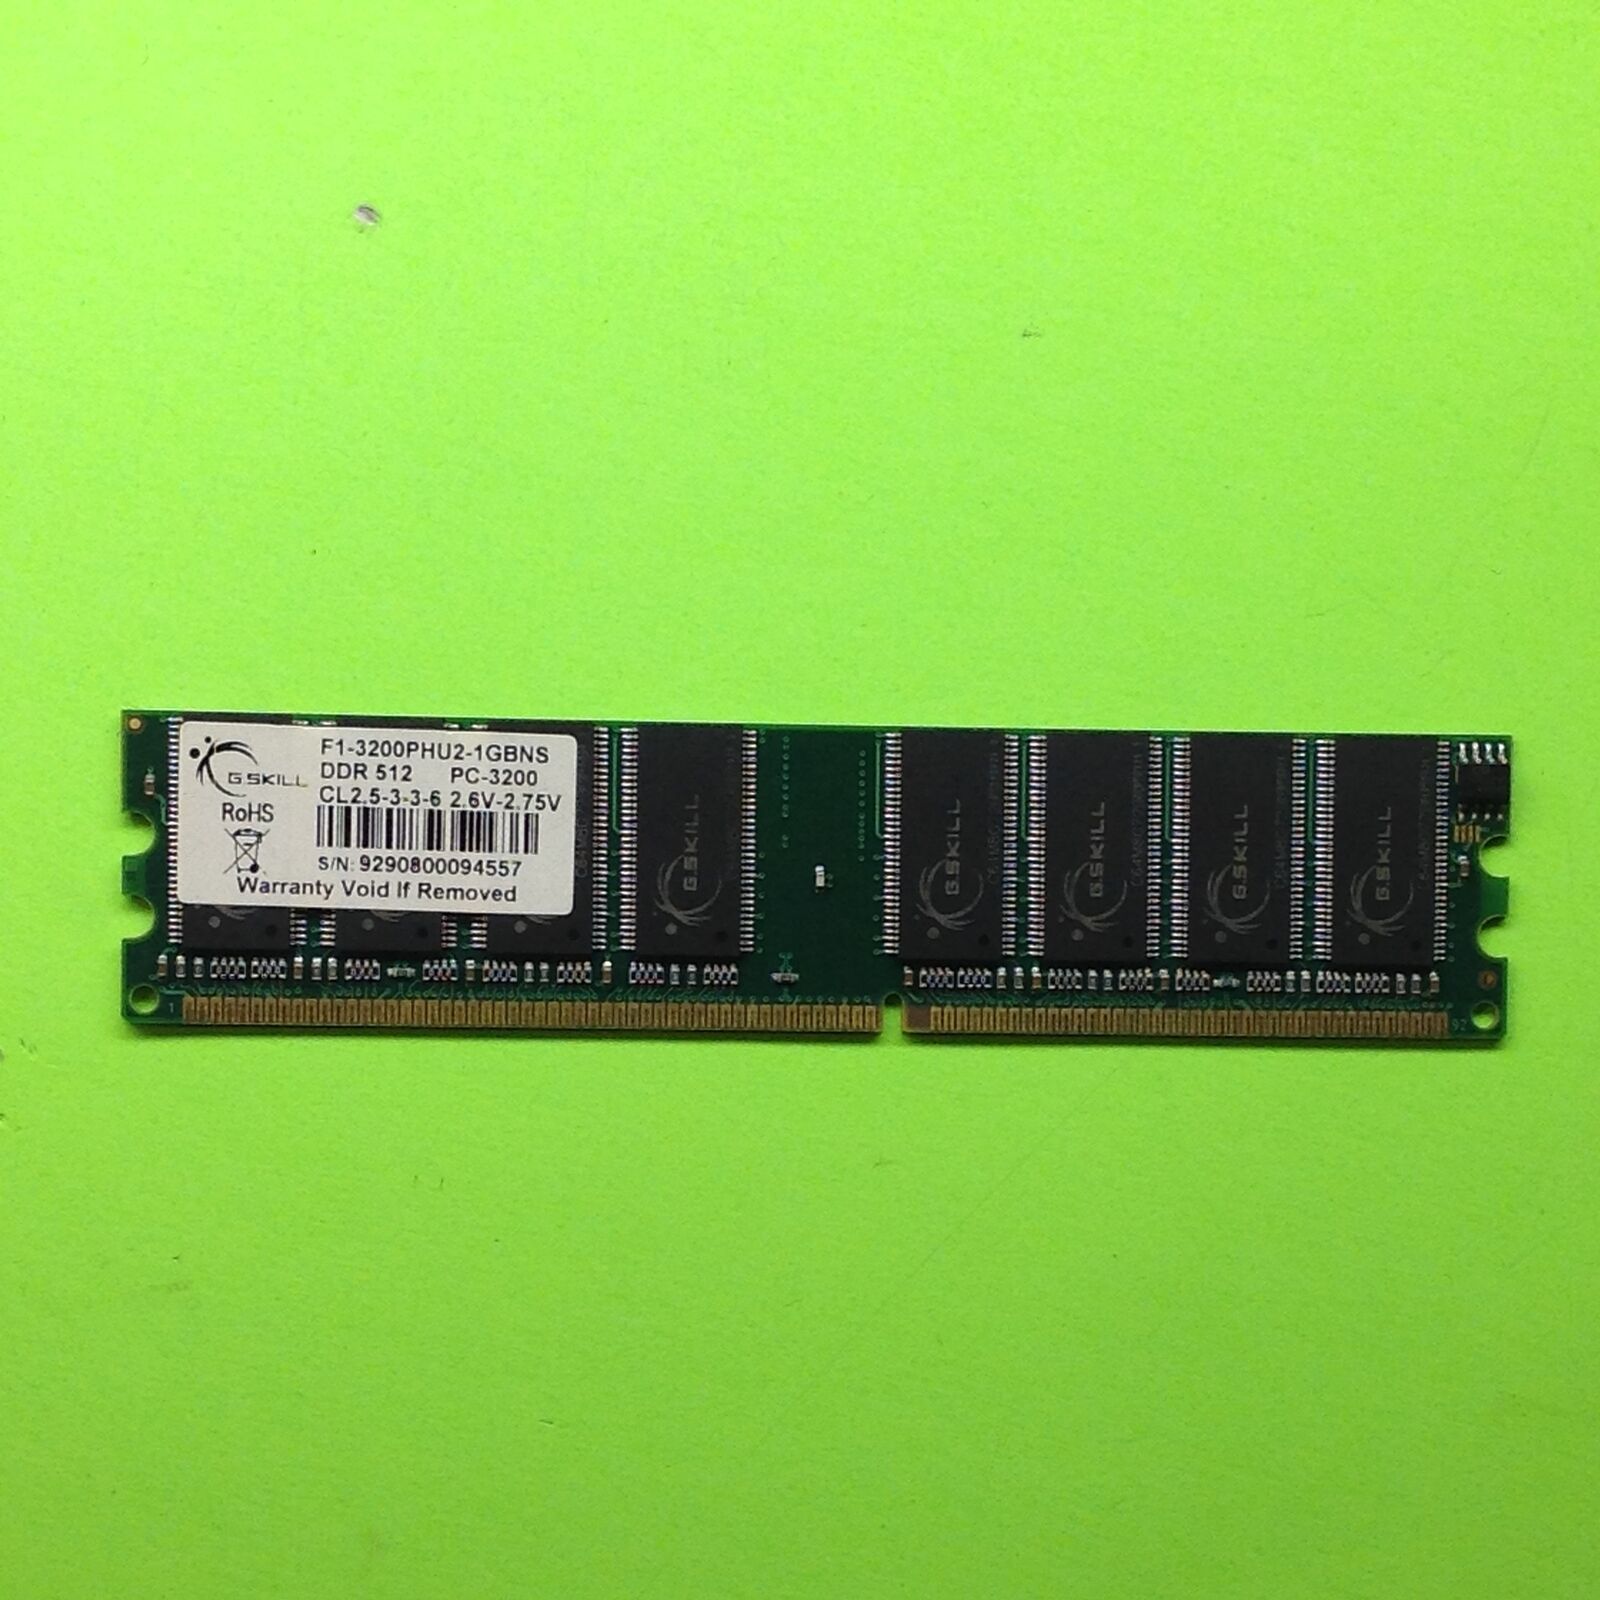 Gskill F1-3200PHU2-1GBNS DDR 512 PC 3200 1GB Random Access Memory RAM